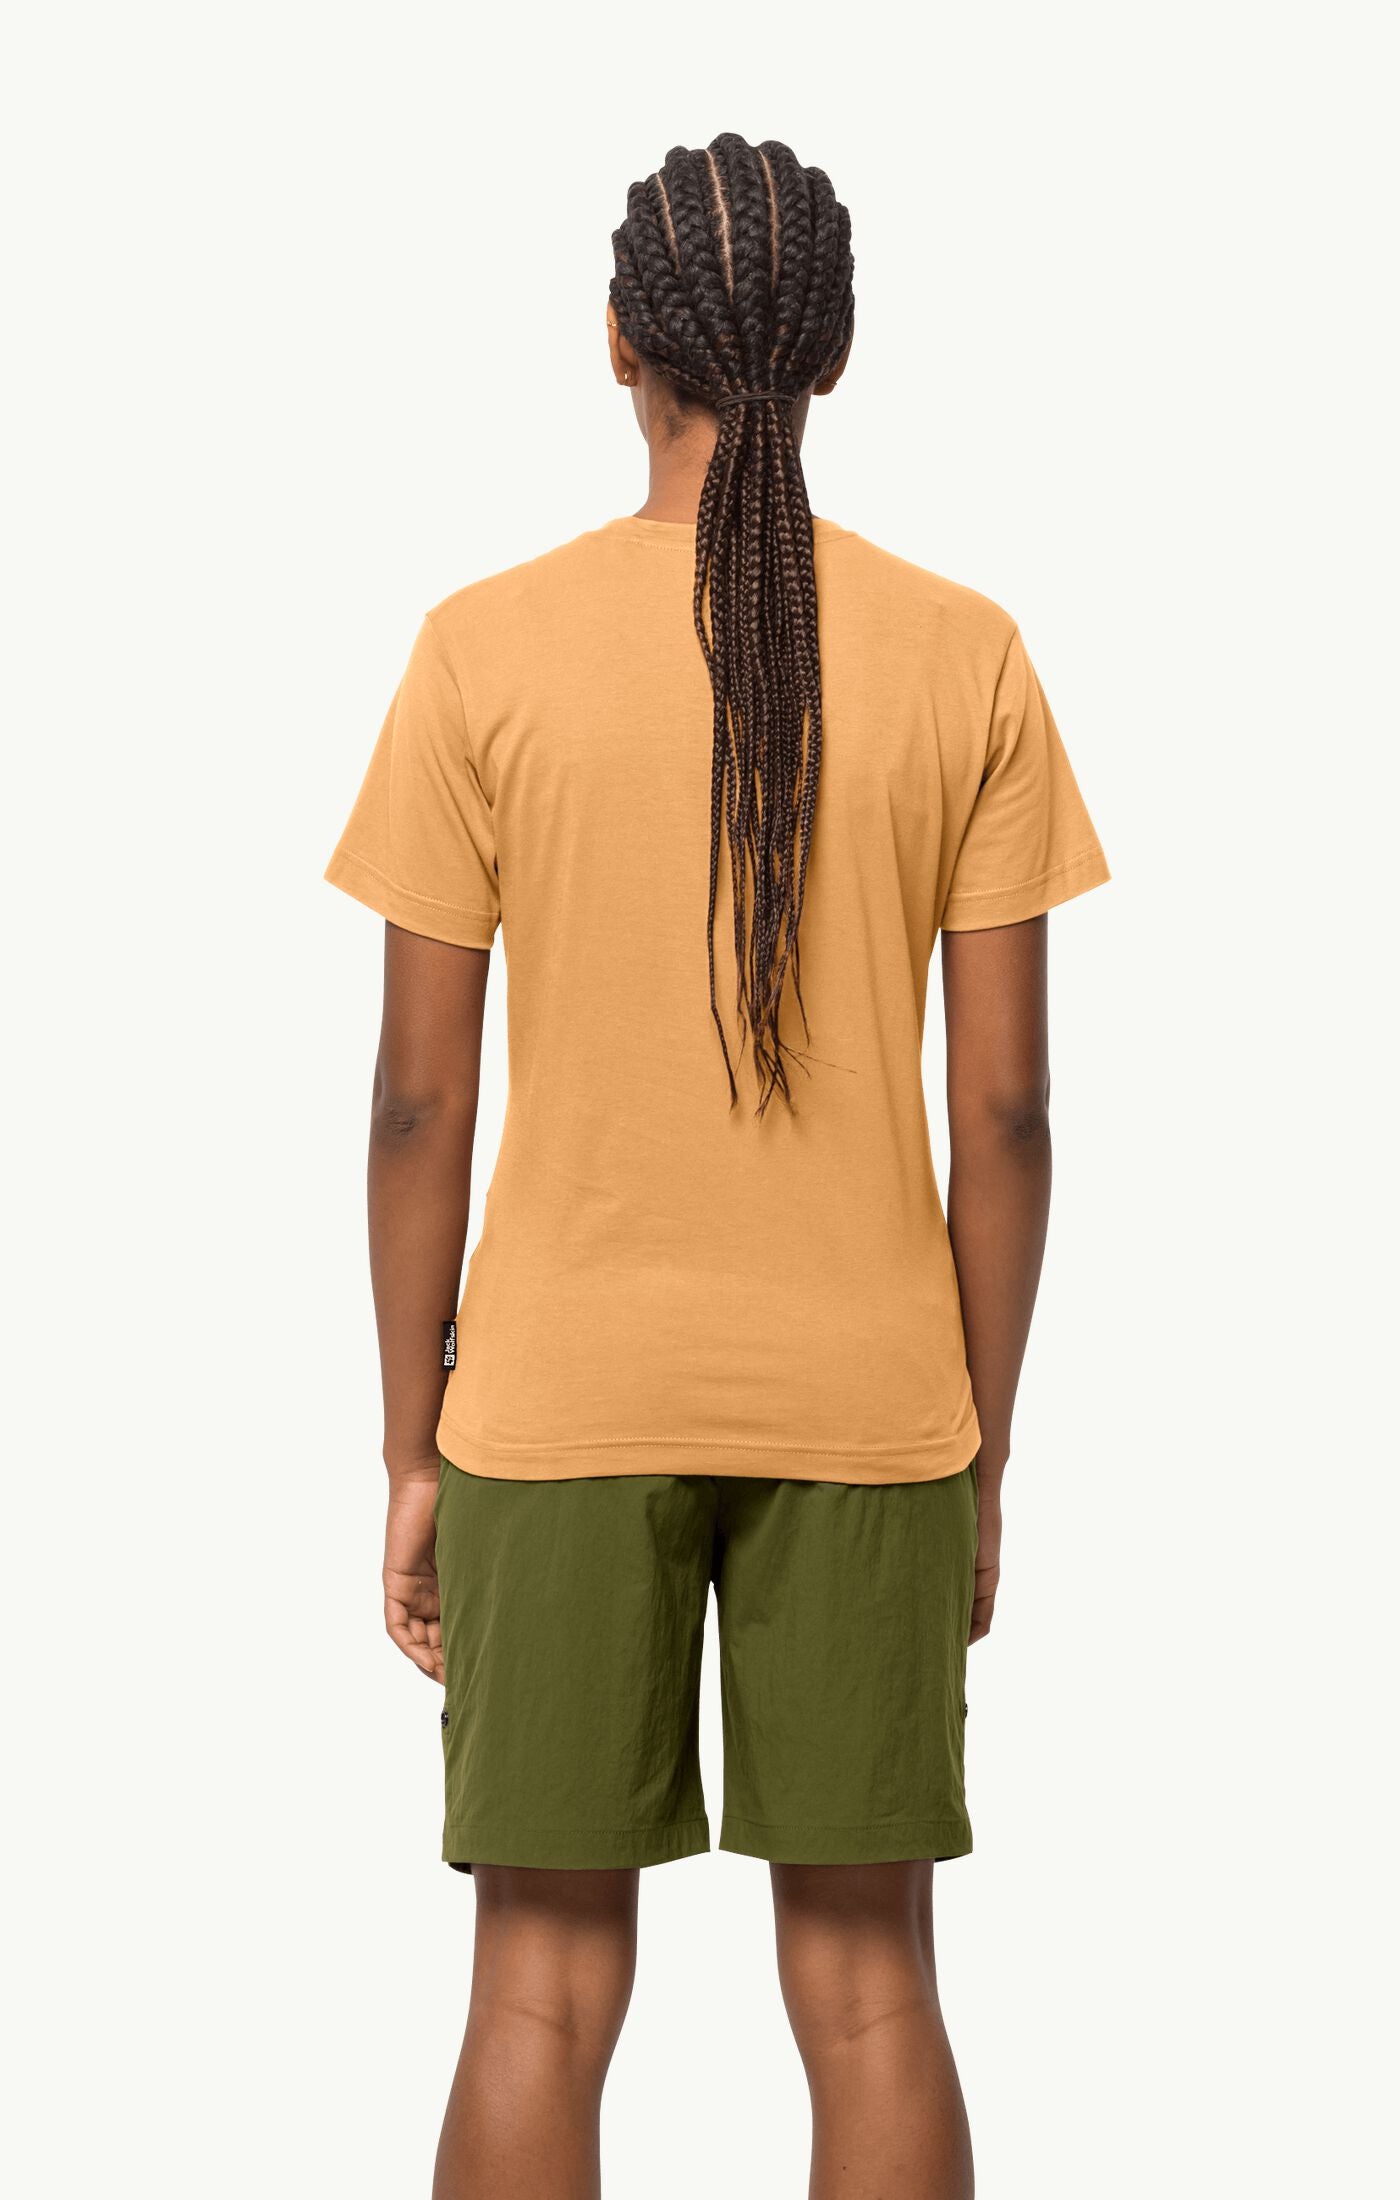 & Wolfskin-F-T-T-shirt Jack campfire Sport t cotton – Chic organic